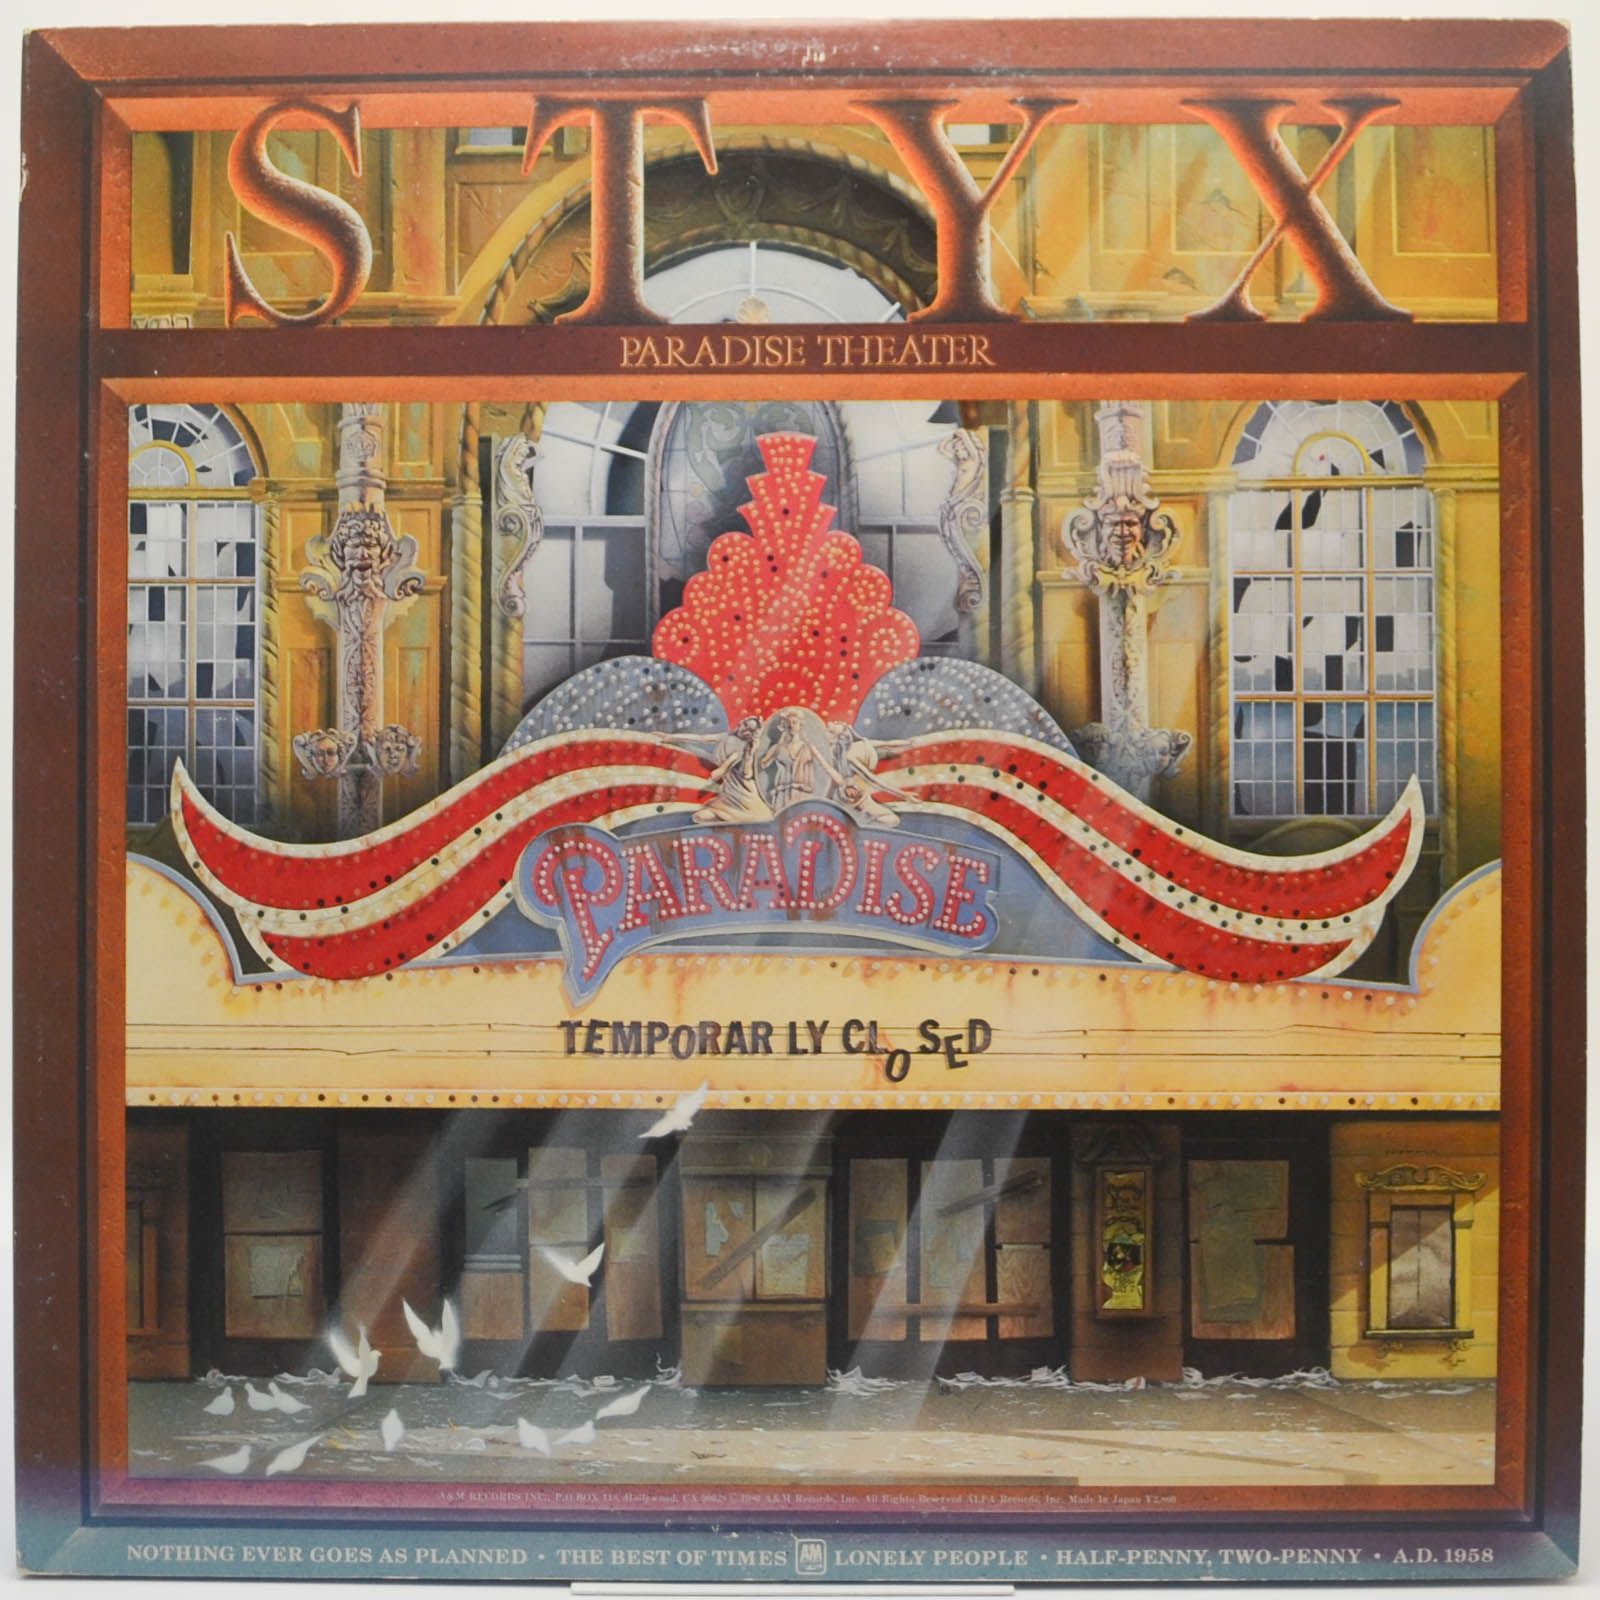 Styx — Paradise Theatre, 1981